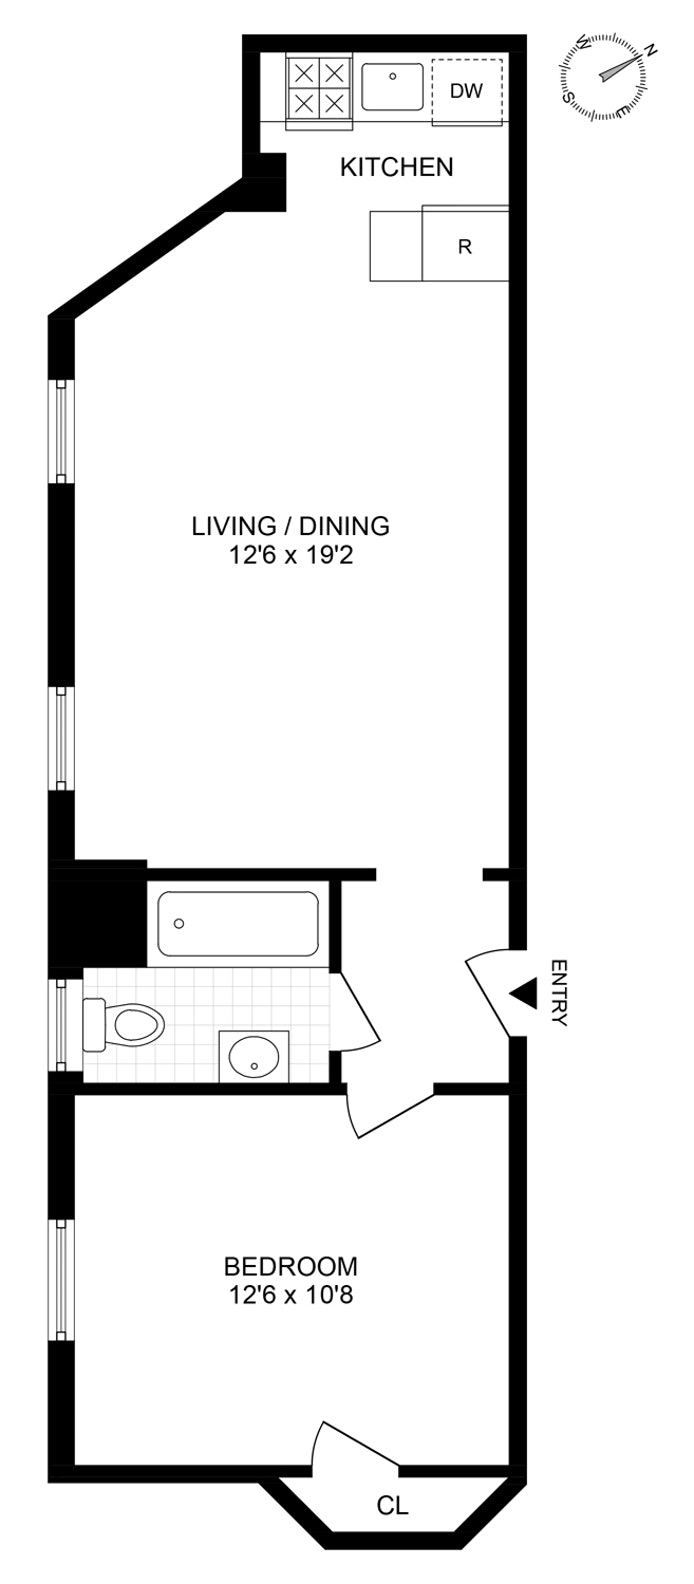 Floorplan for 60 West 76th Street, 2I